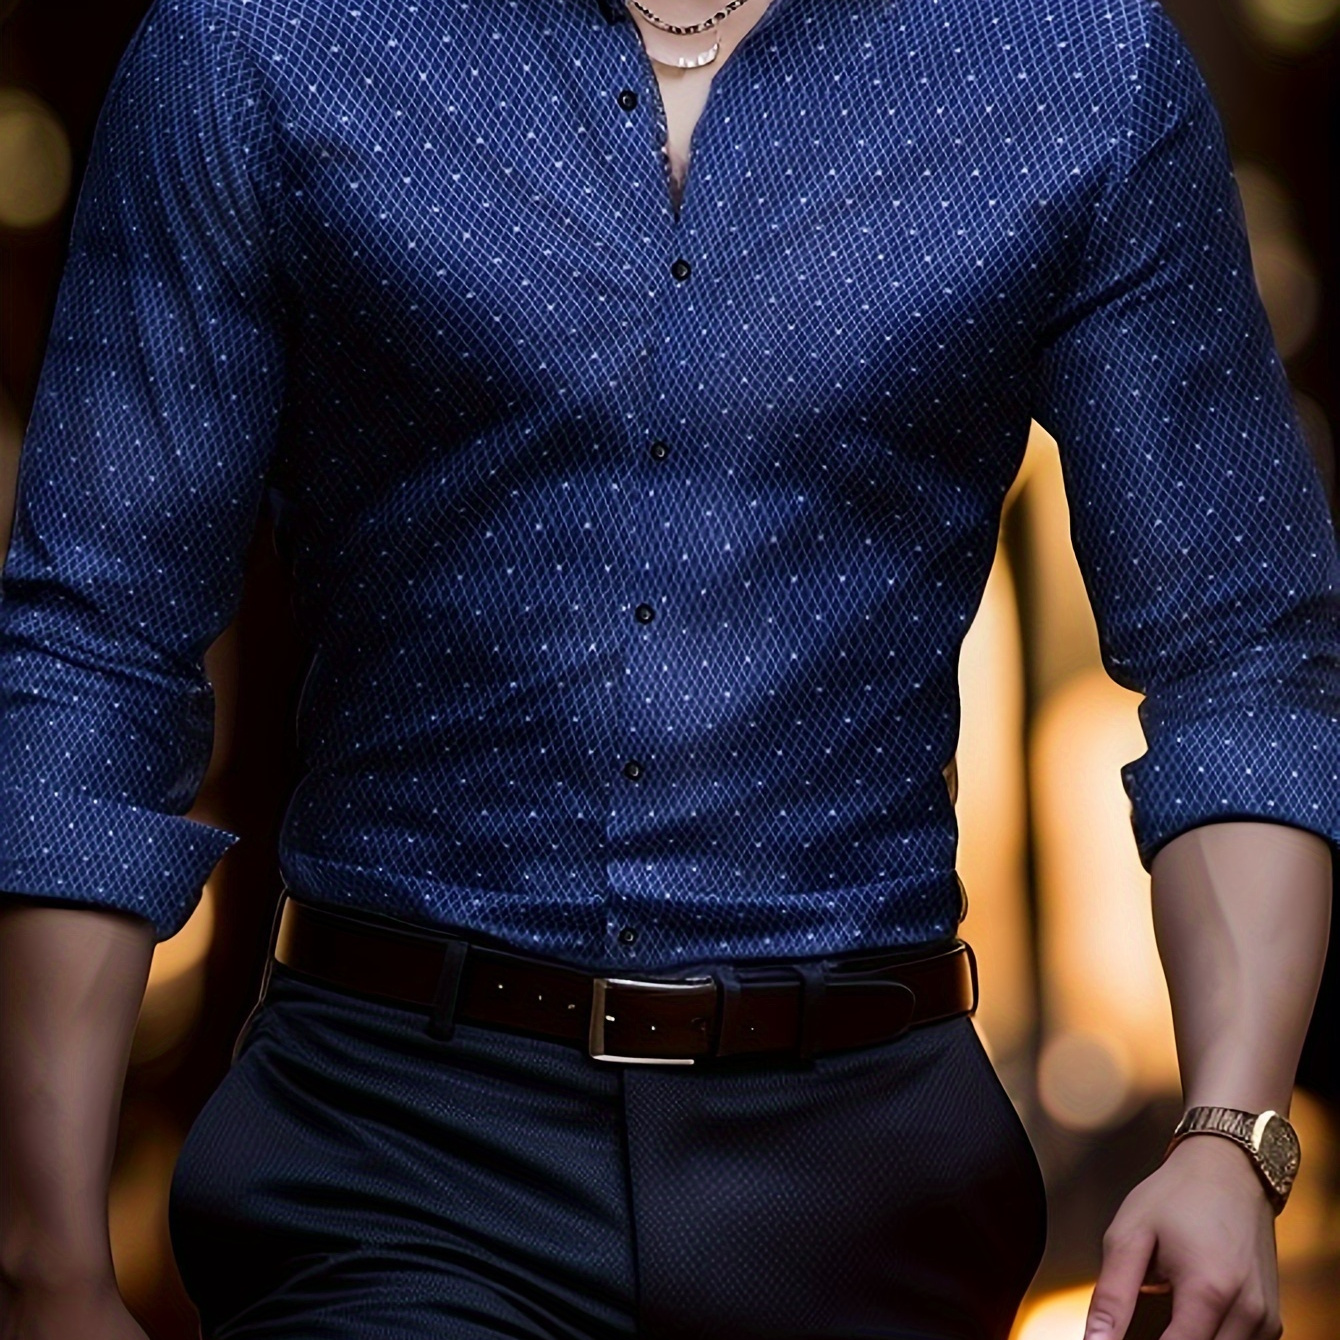 

Men's Rhombus Pattern Dress Shirt - Elegant Long Sleeve Shirt, Button-down Shirt, Formal Attire For Business & Special Occasions